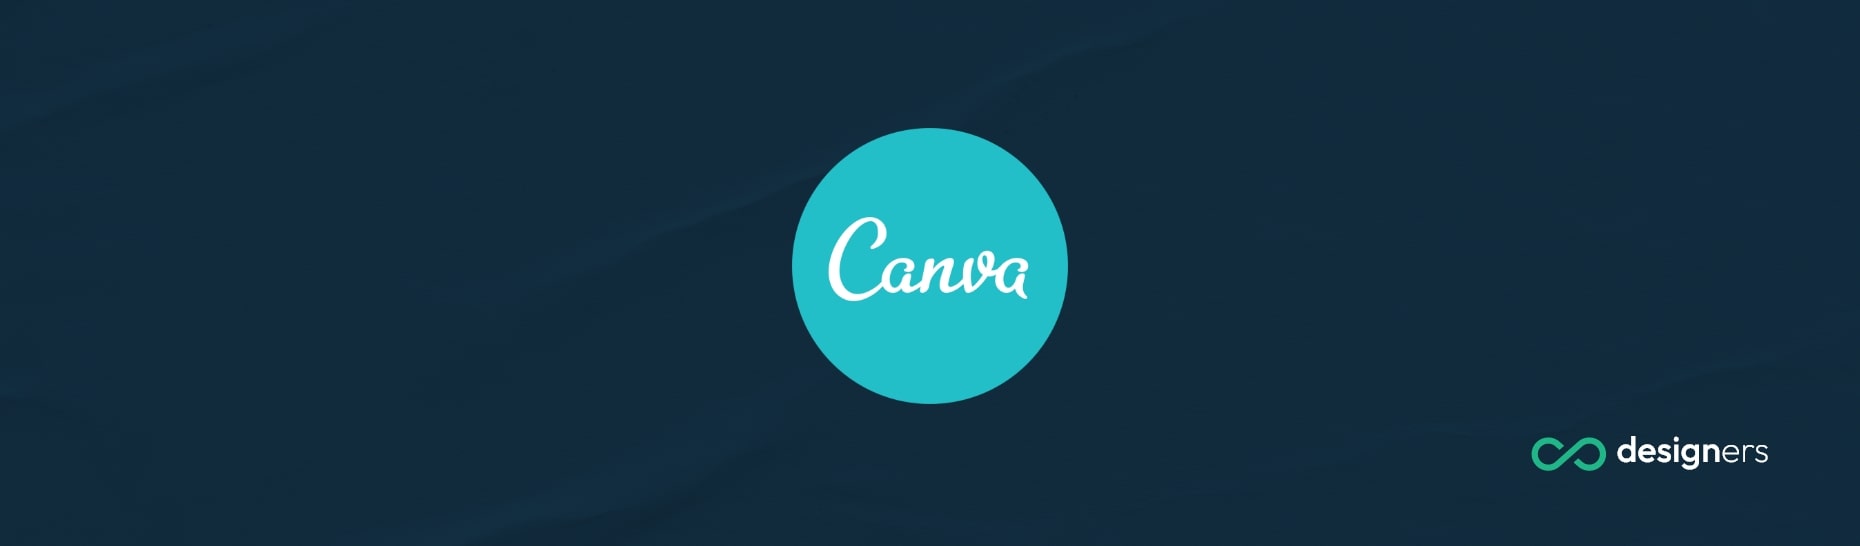 How Do I Create a List in Canva?